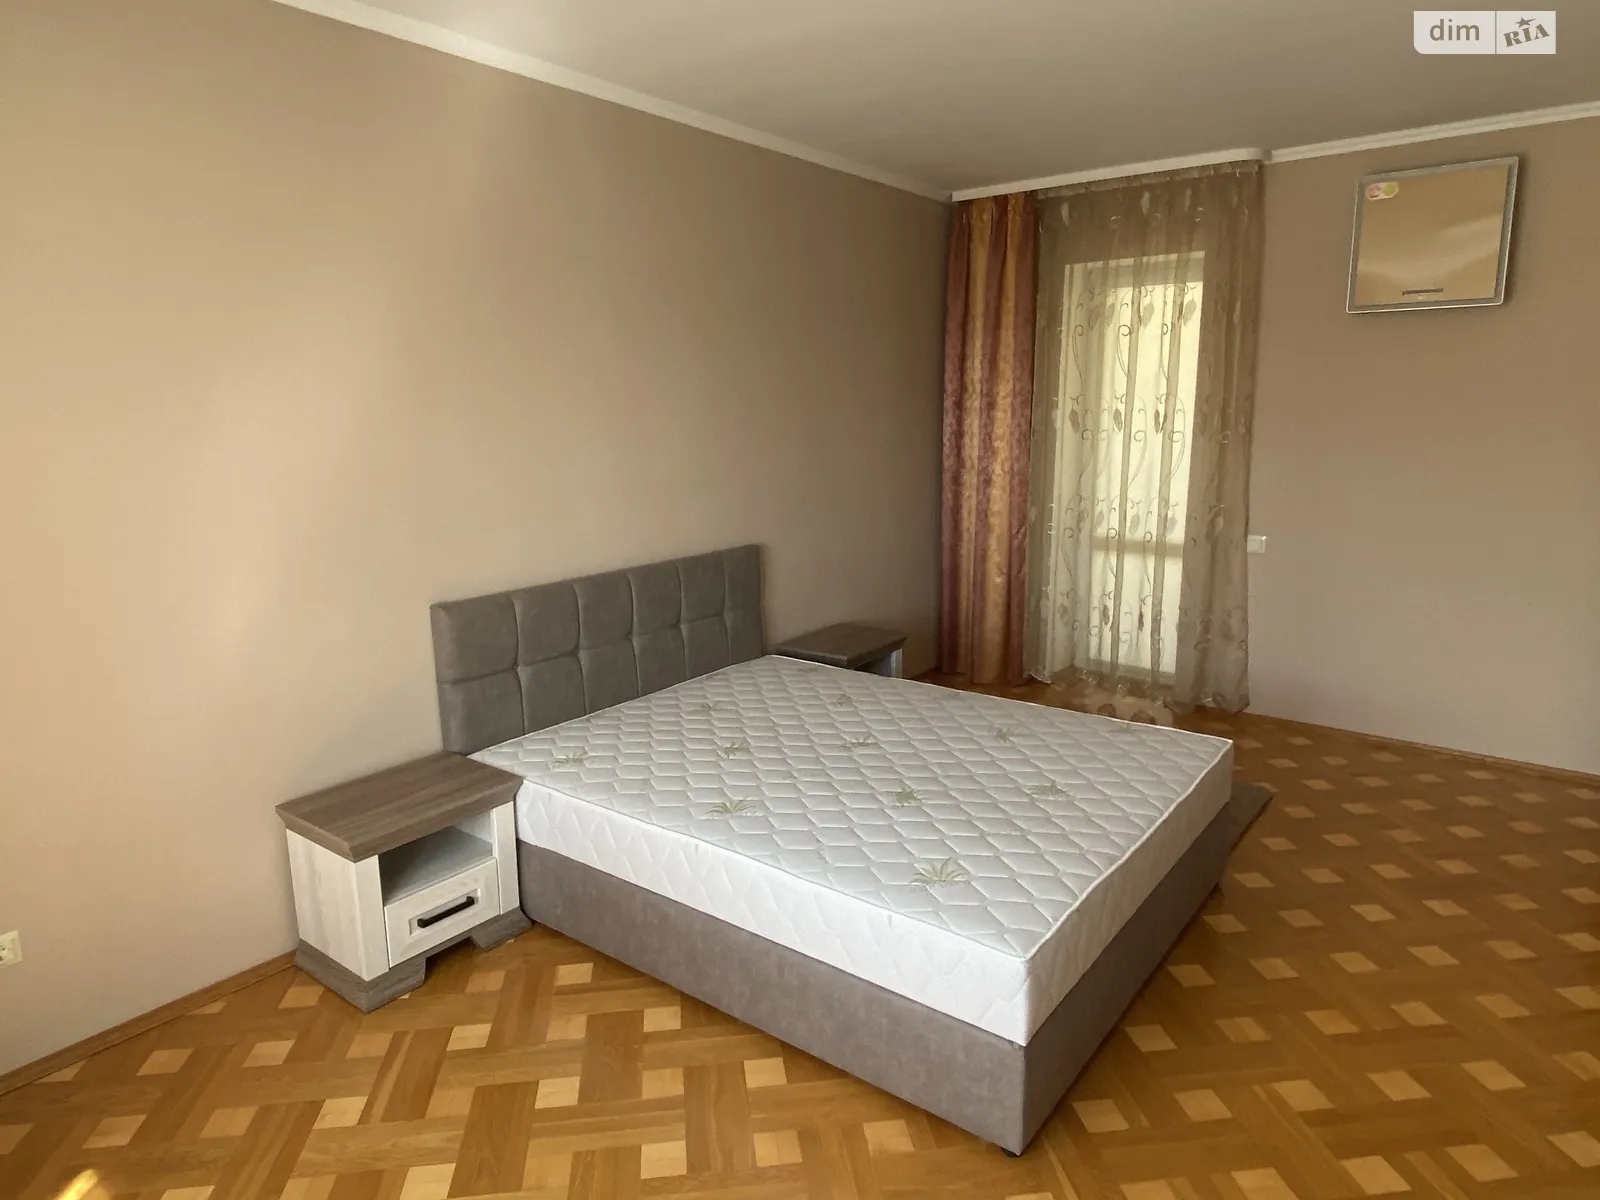 3-кімнатна квартира 144 кв. м у Луцьку - фото 4